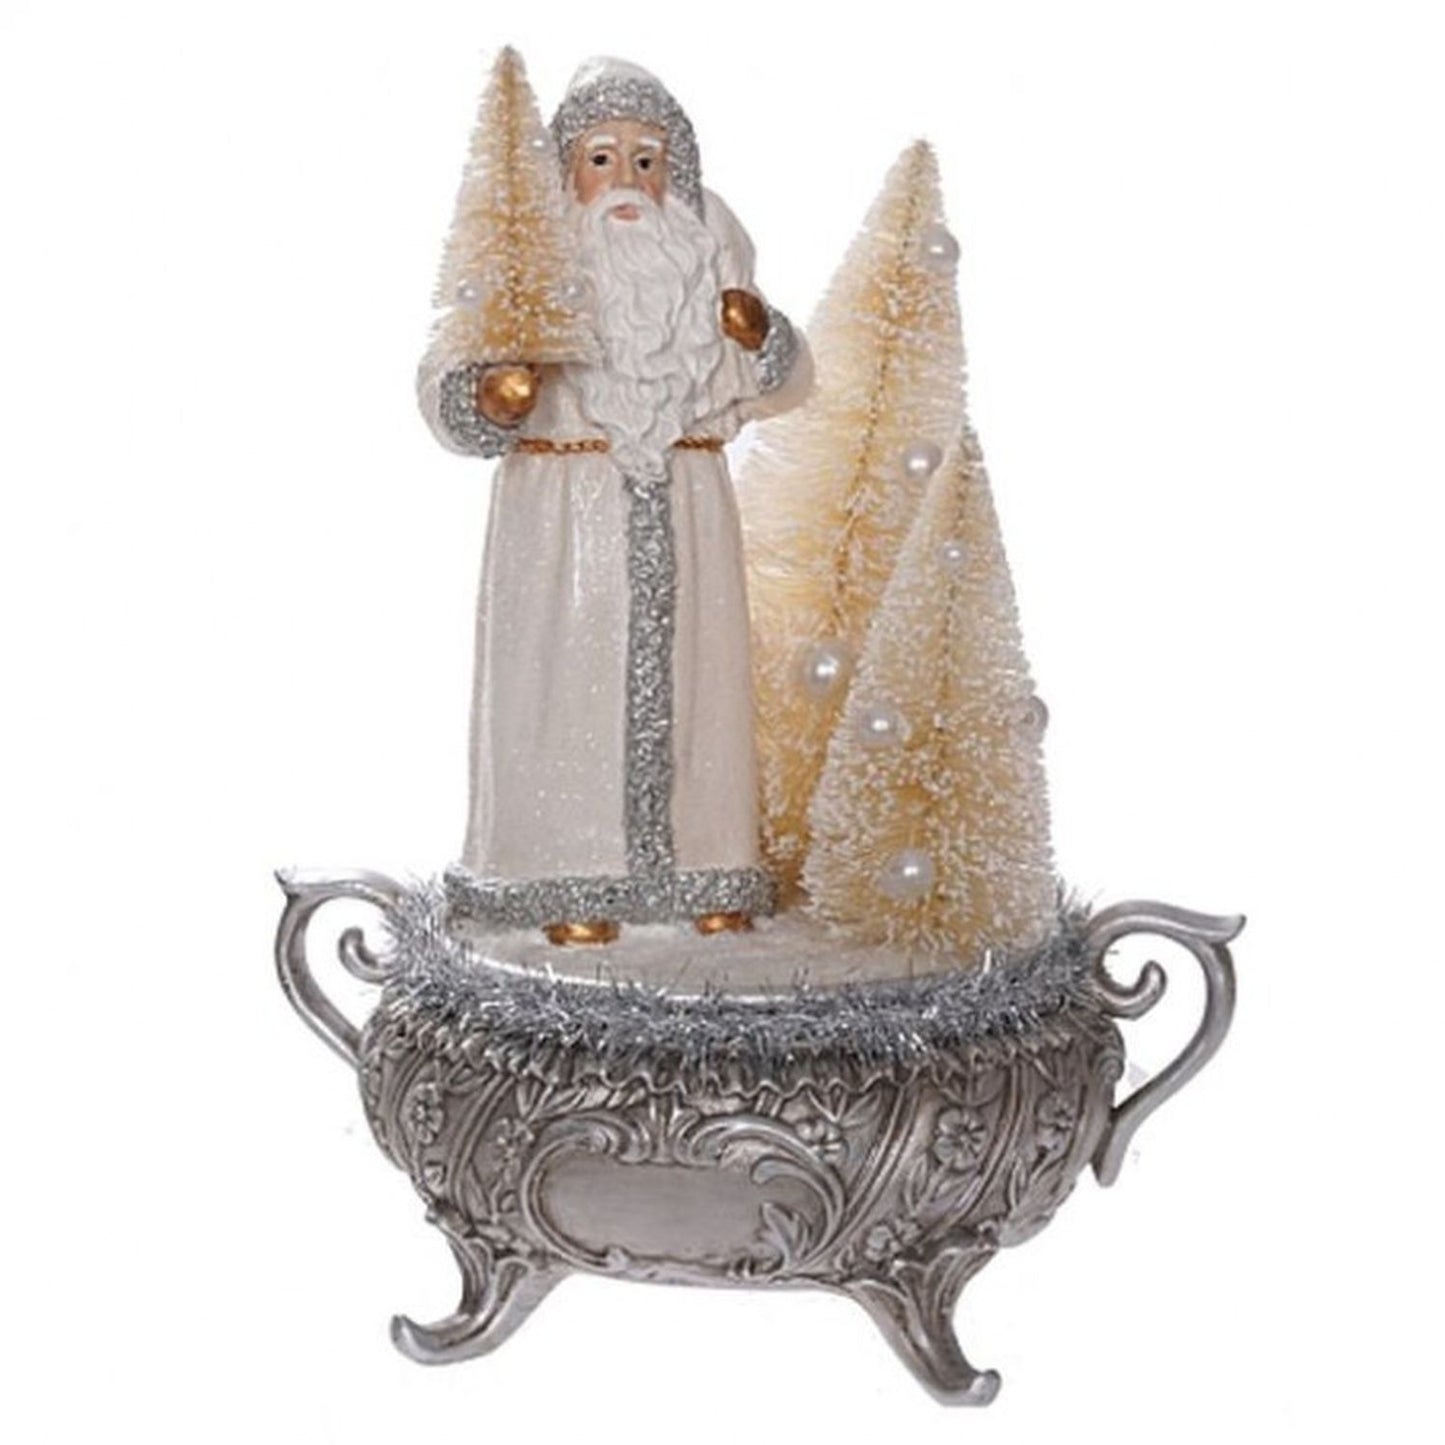 Regency International 10" Resin Santa on Urn with Bristle Tree